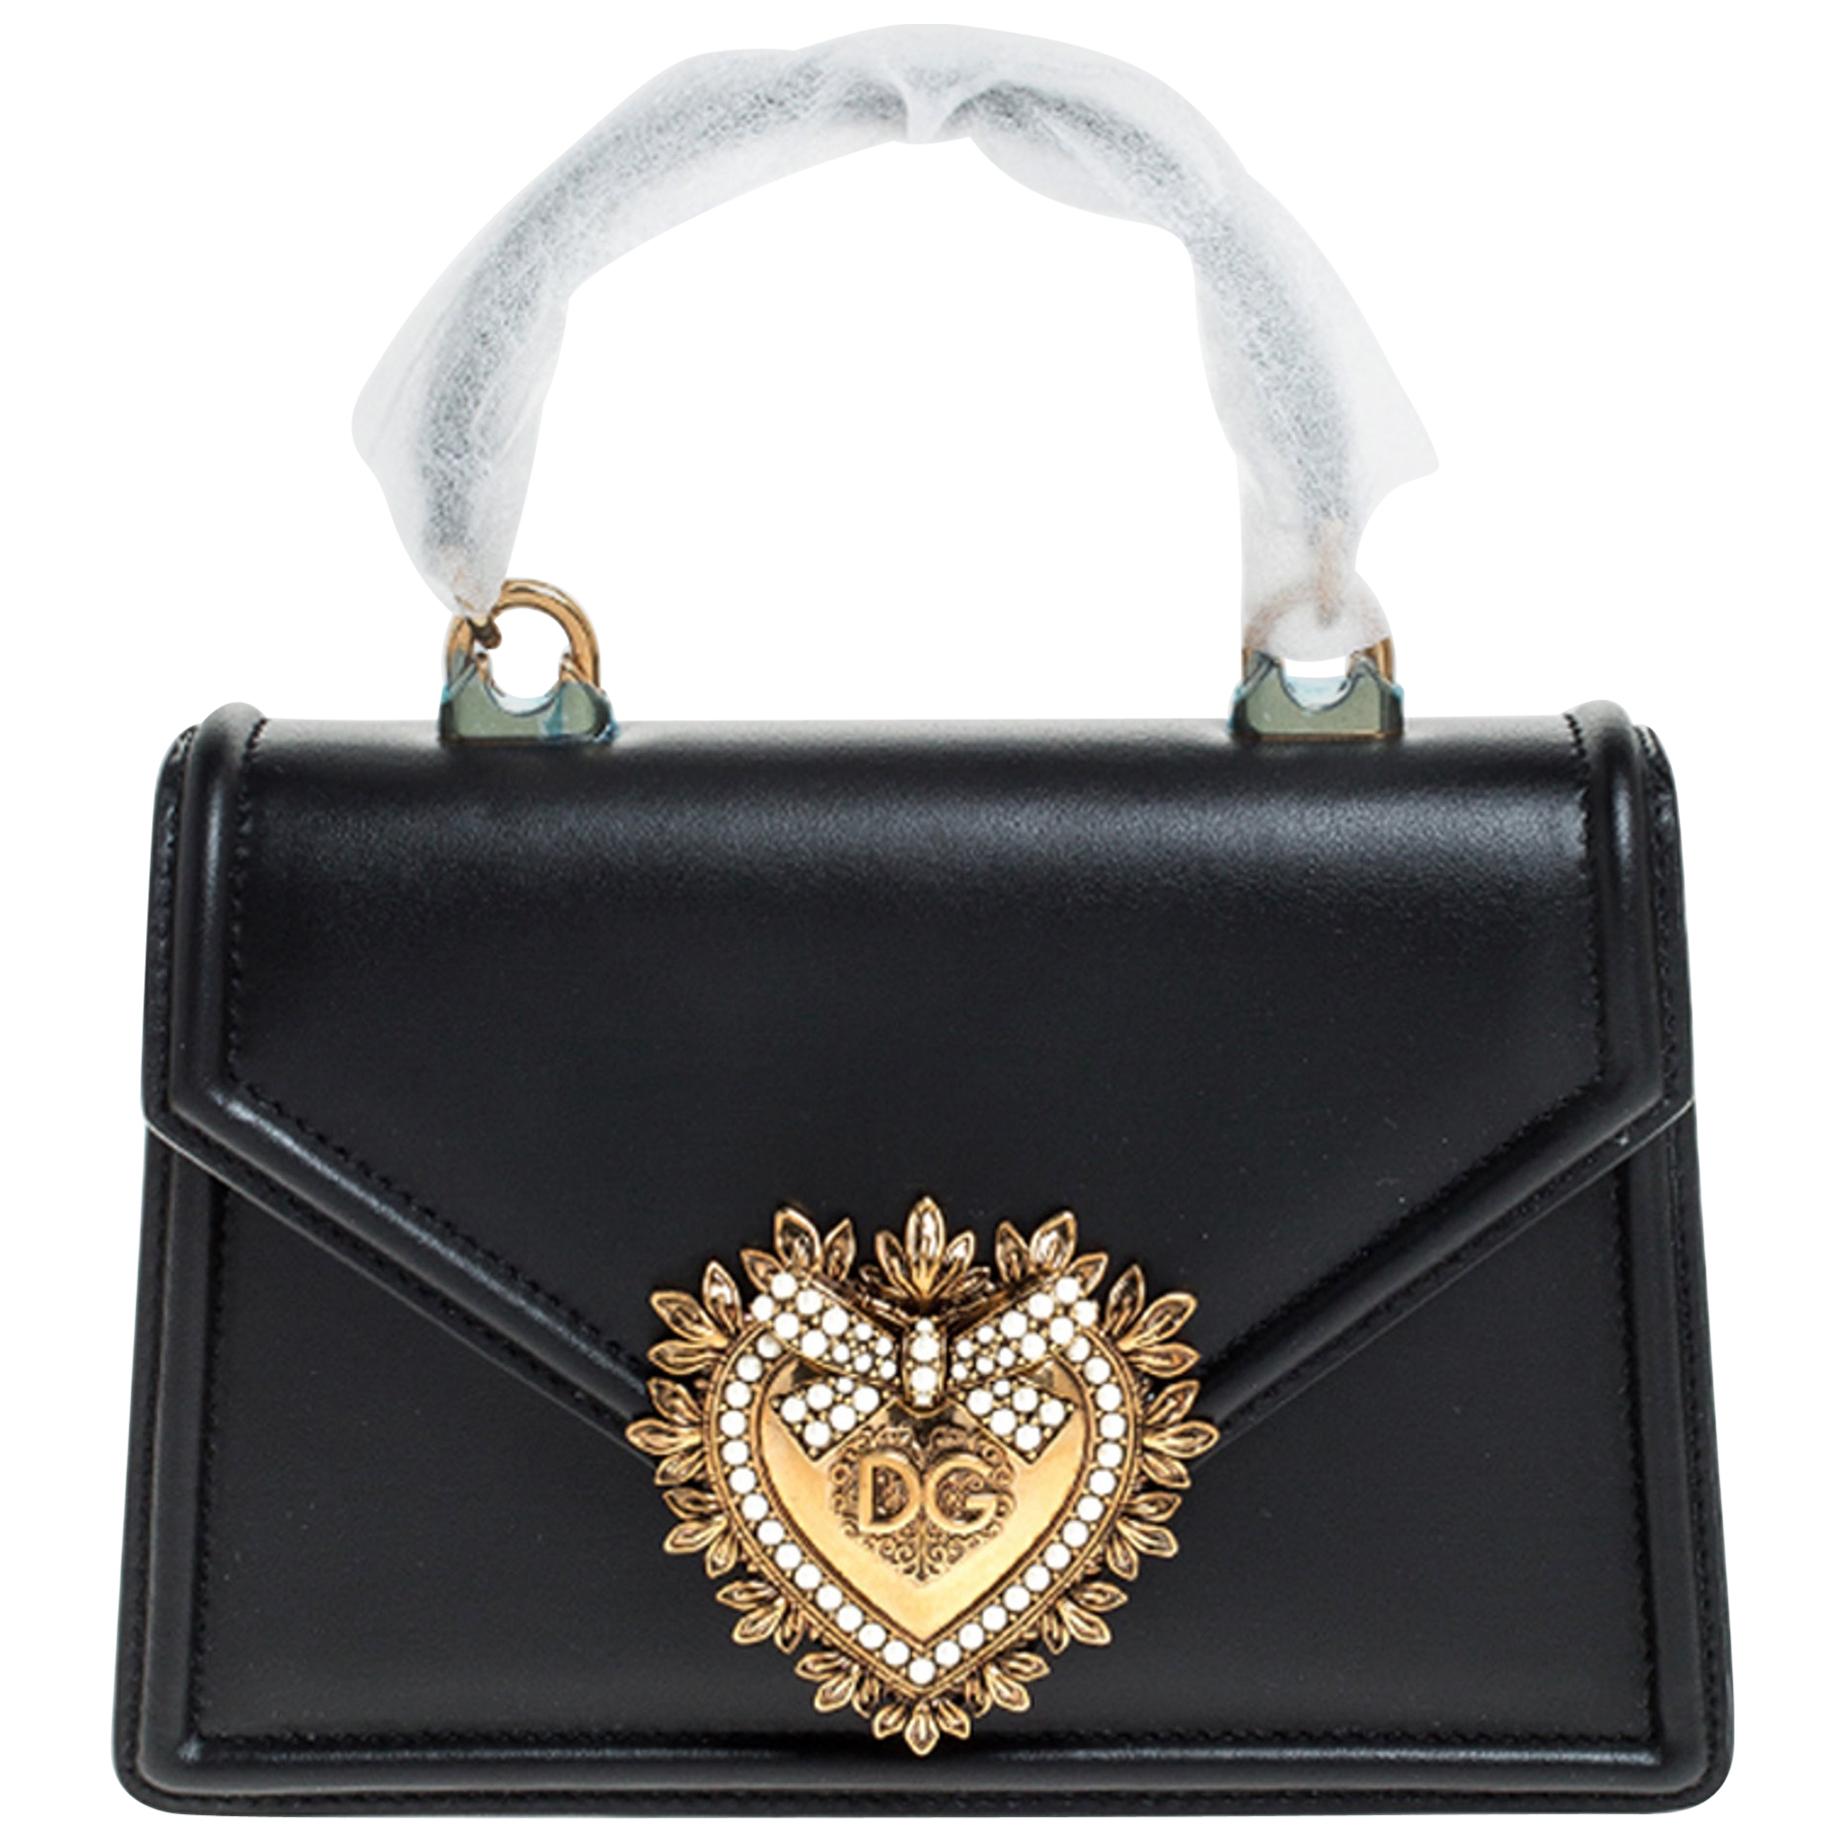 Dolce & Gabbana Black Leather Small Devotion Top Handle Bag